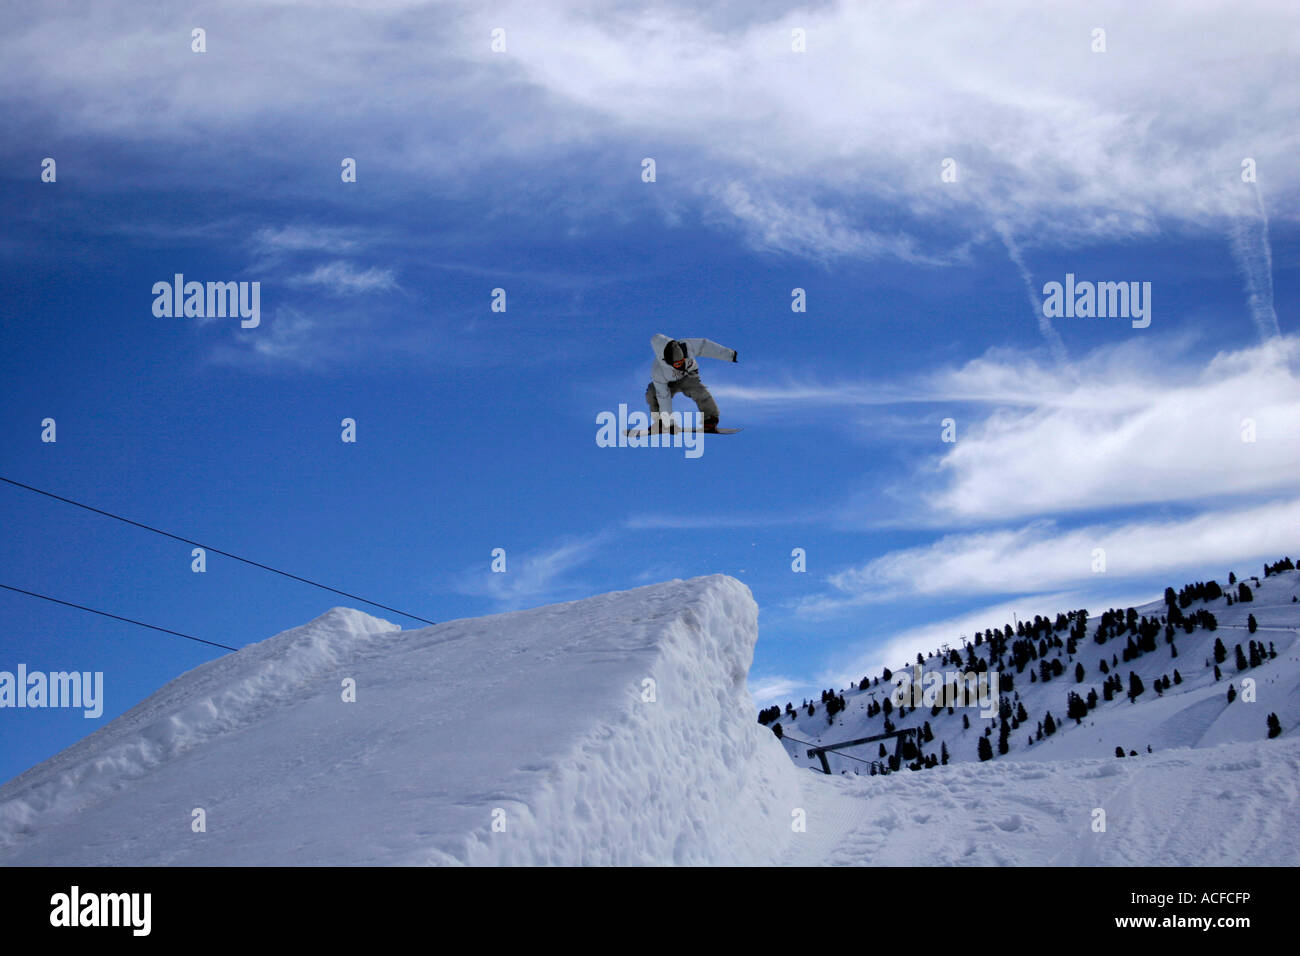 Burton snowboard hi-res stock photography and images - Alamy